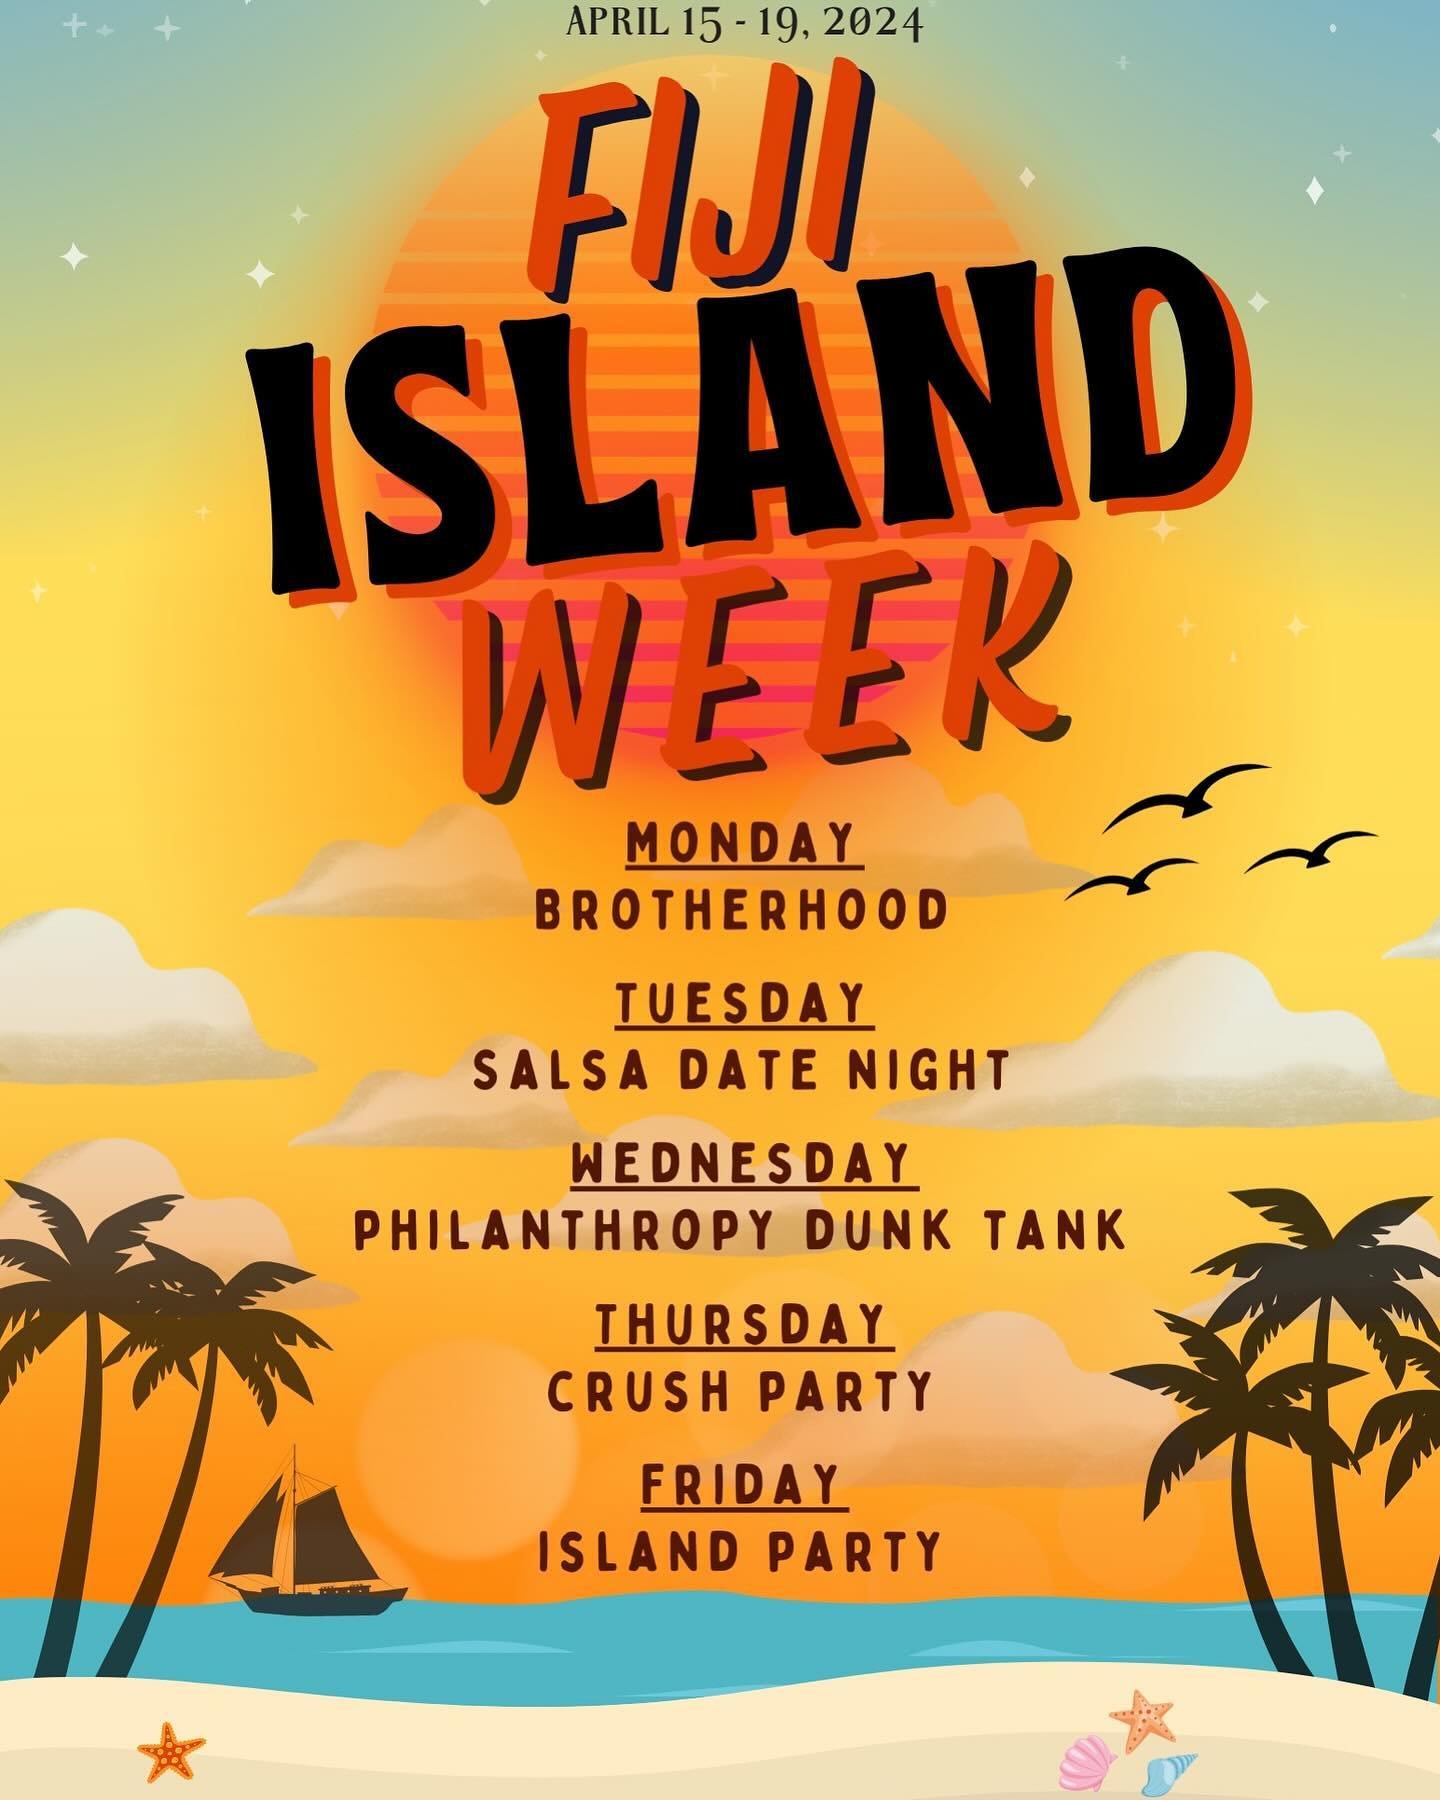 Island Week at FIJI is NEXT WEEK‼️🏝️